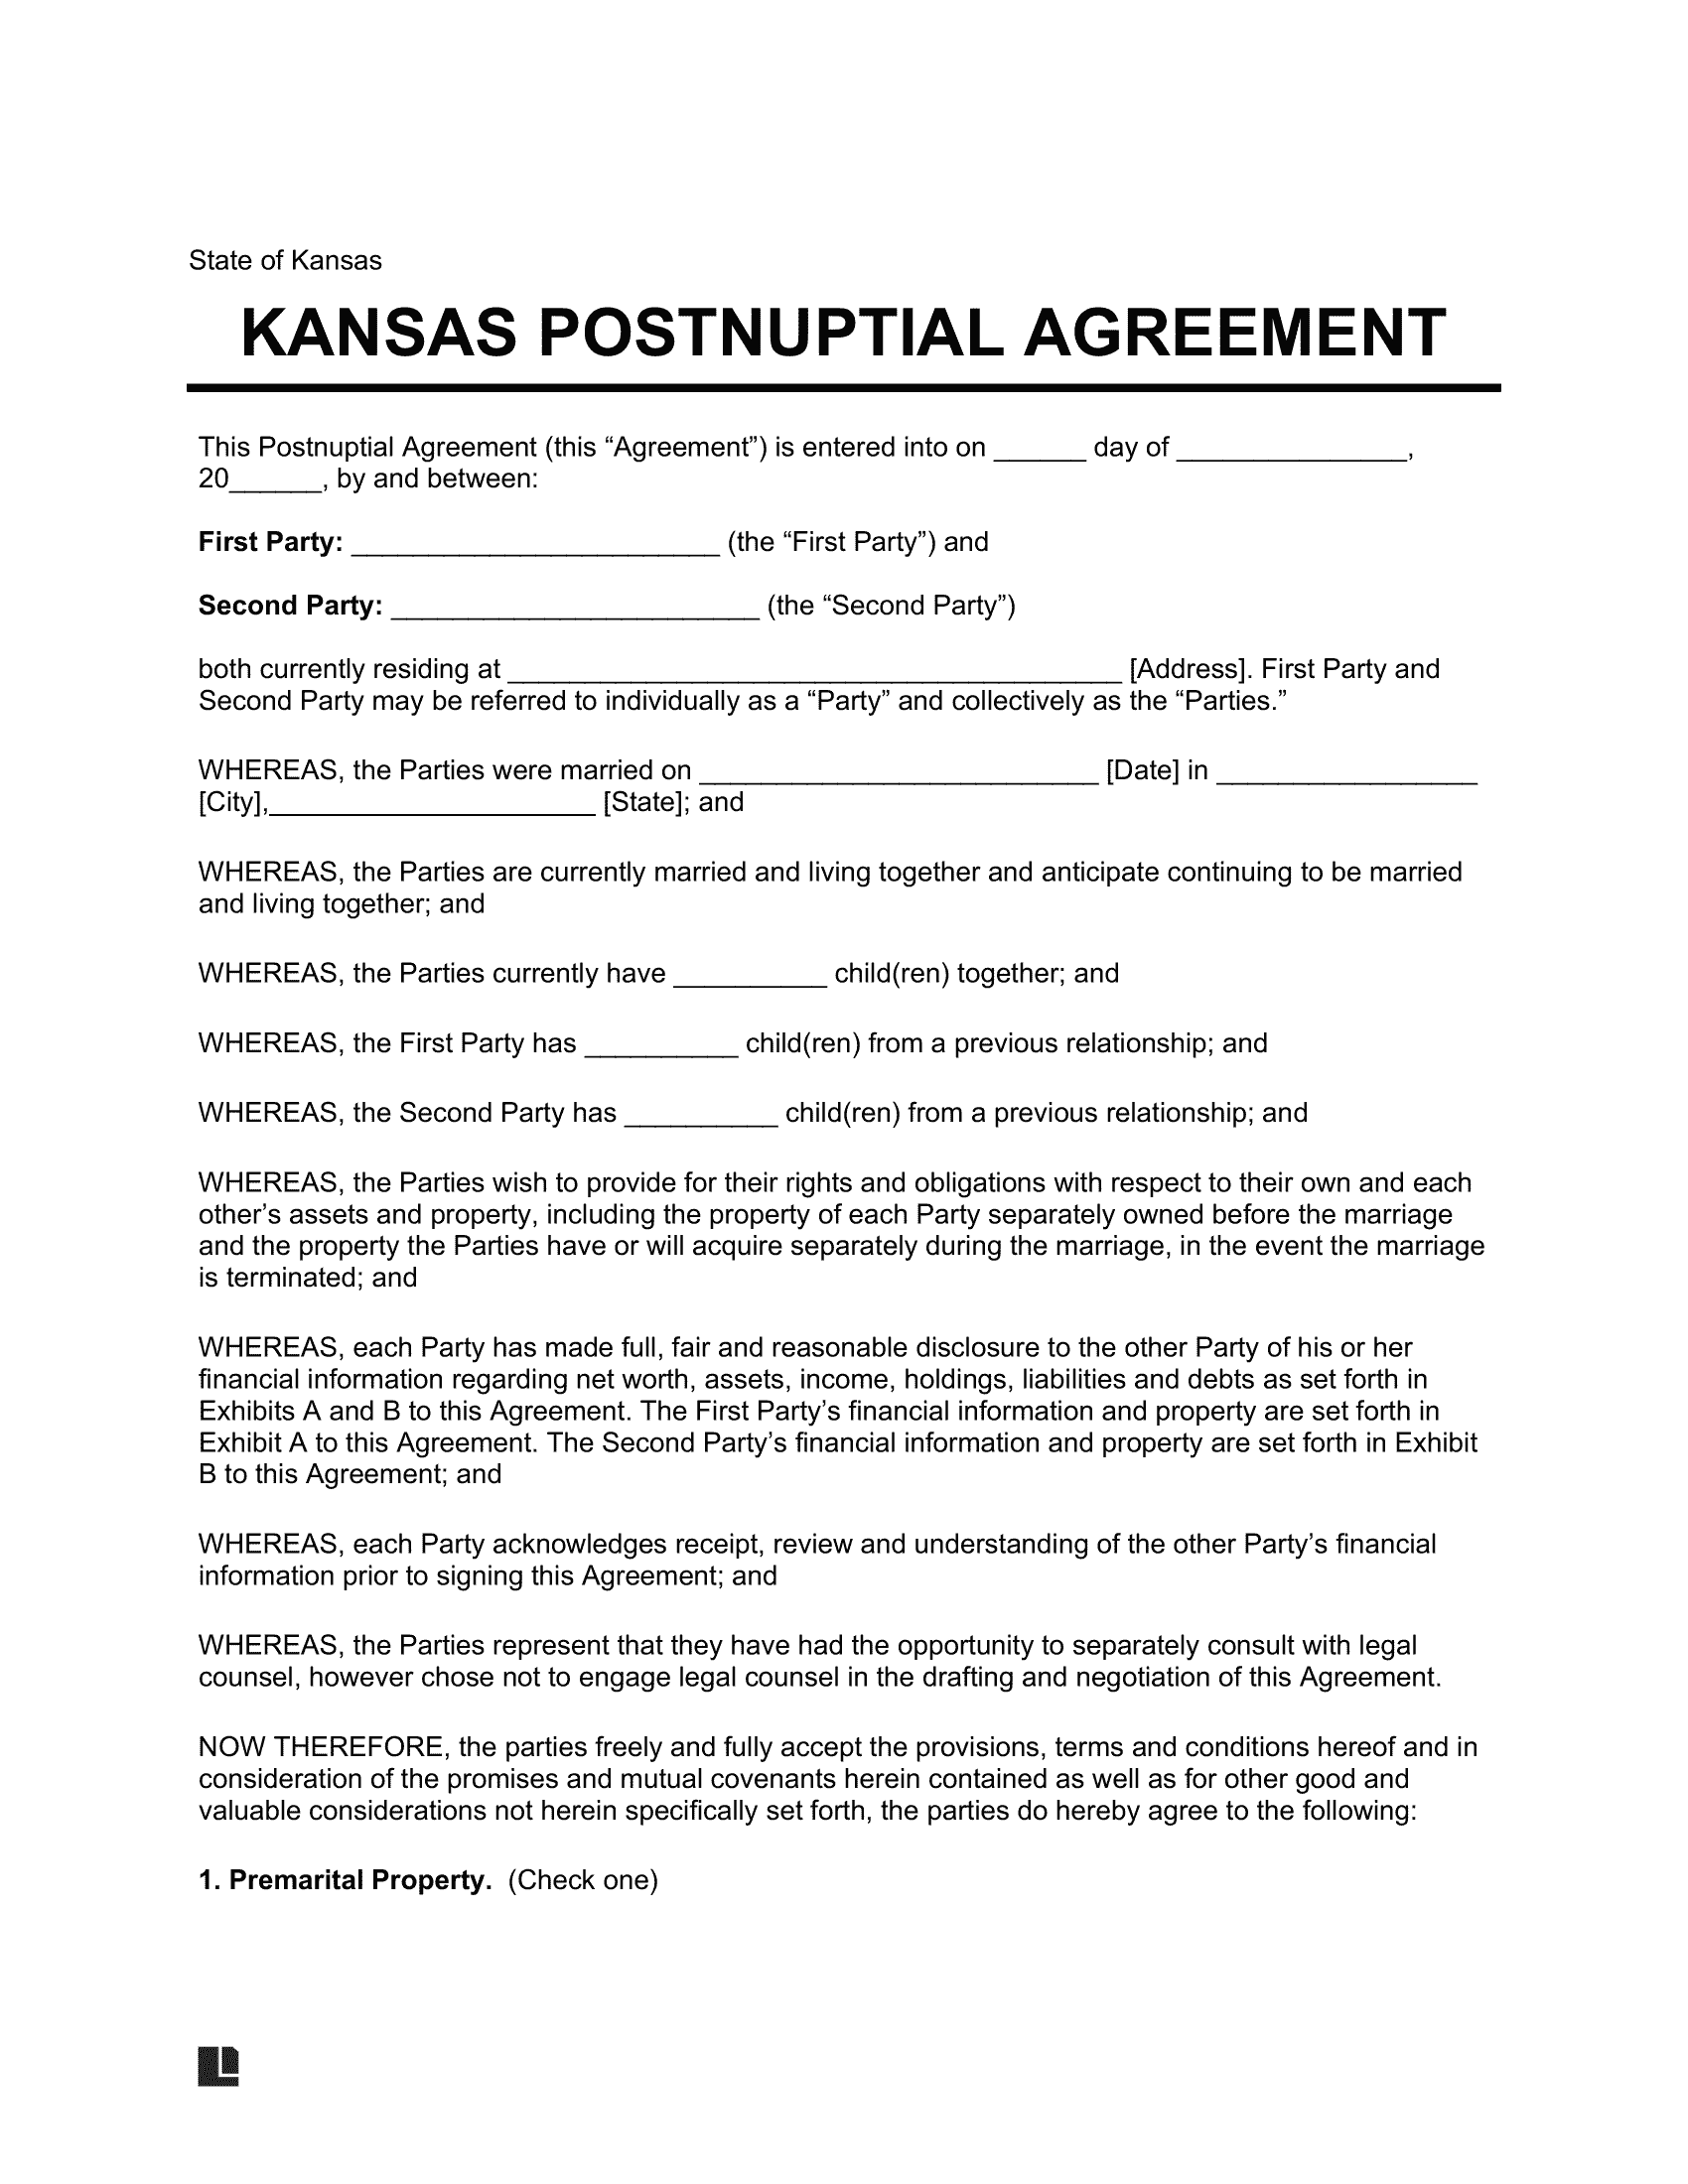 Kansas Postnuptial Agreement Template